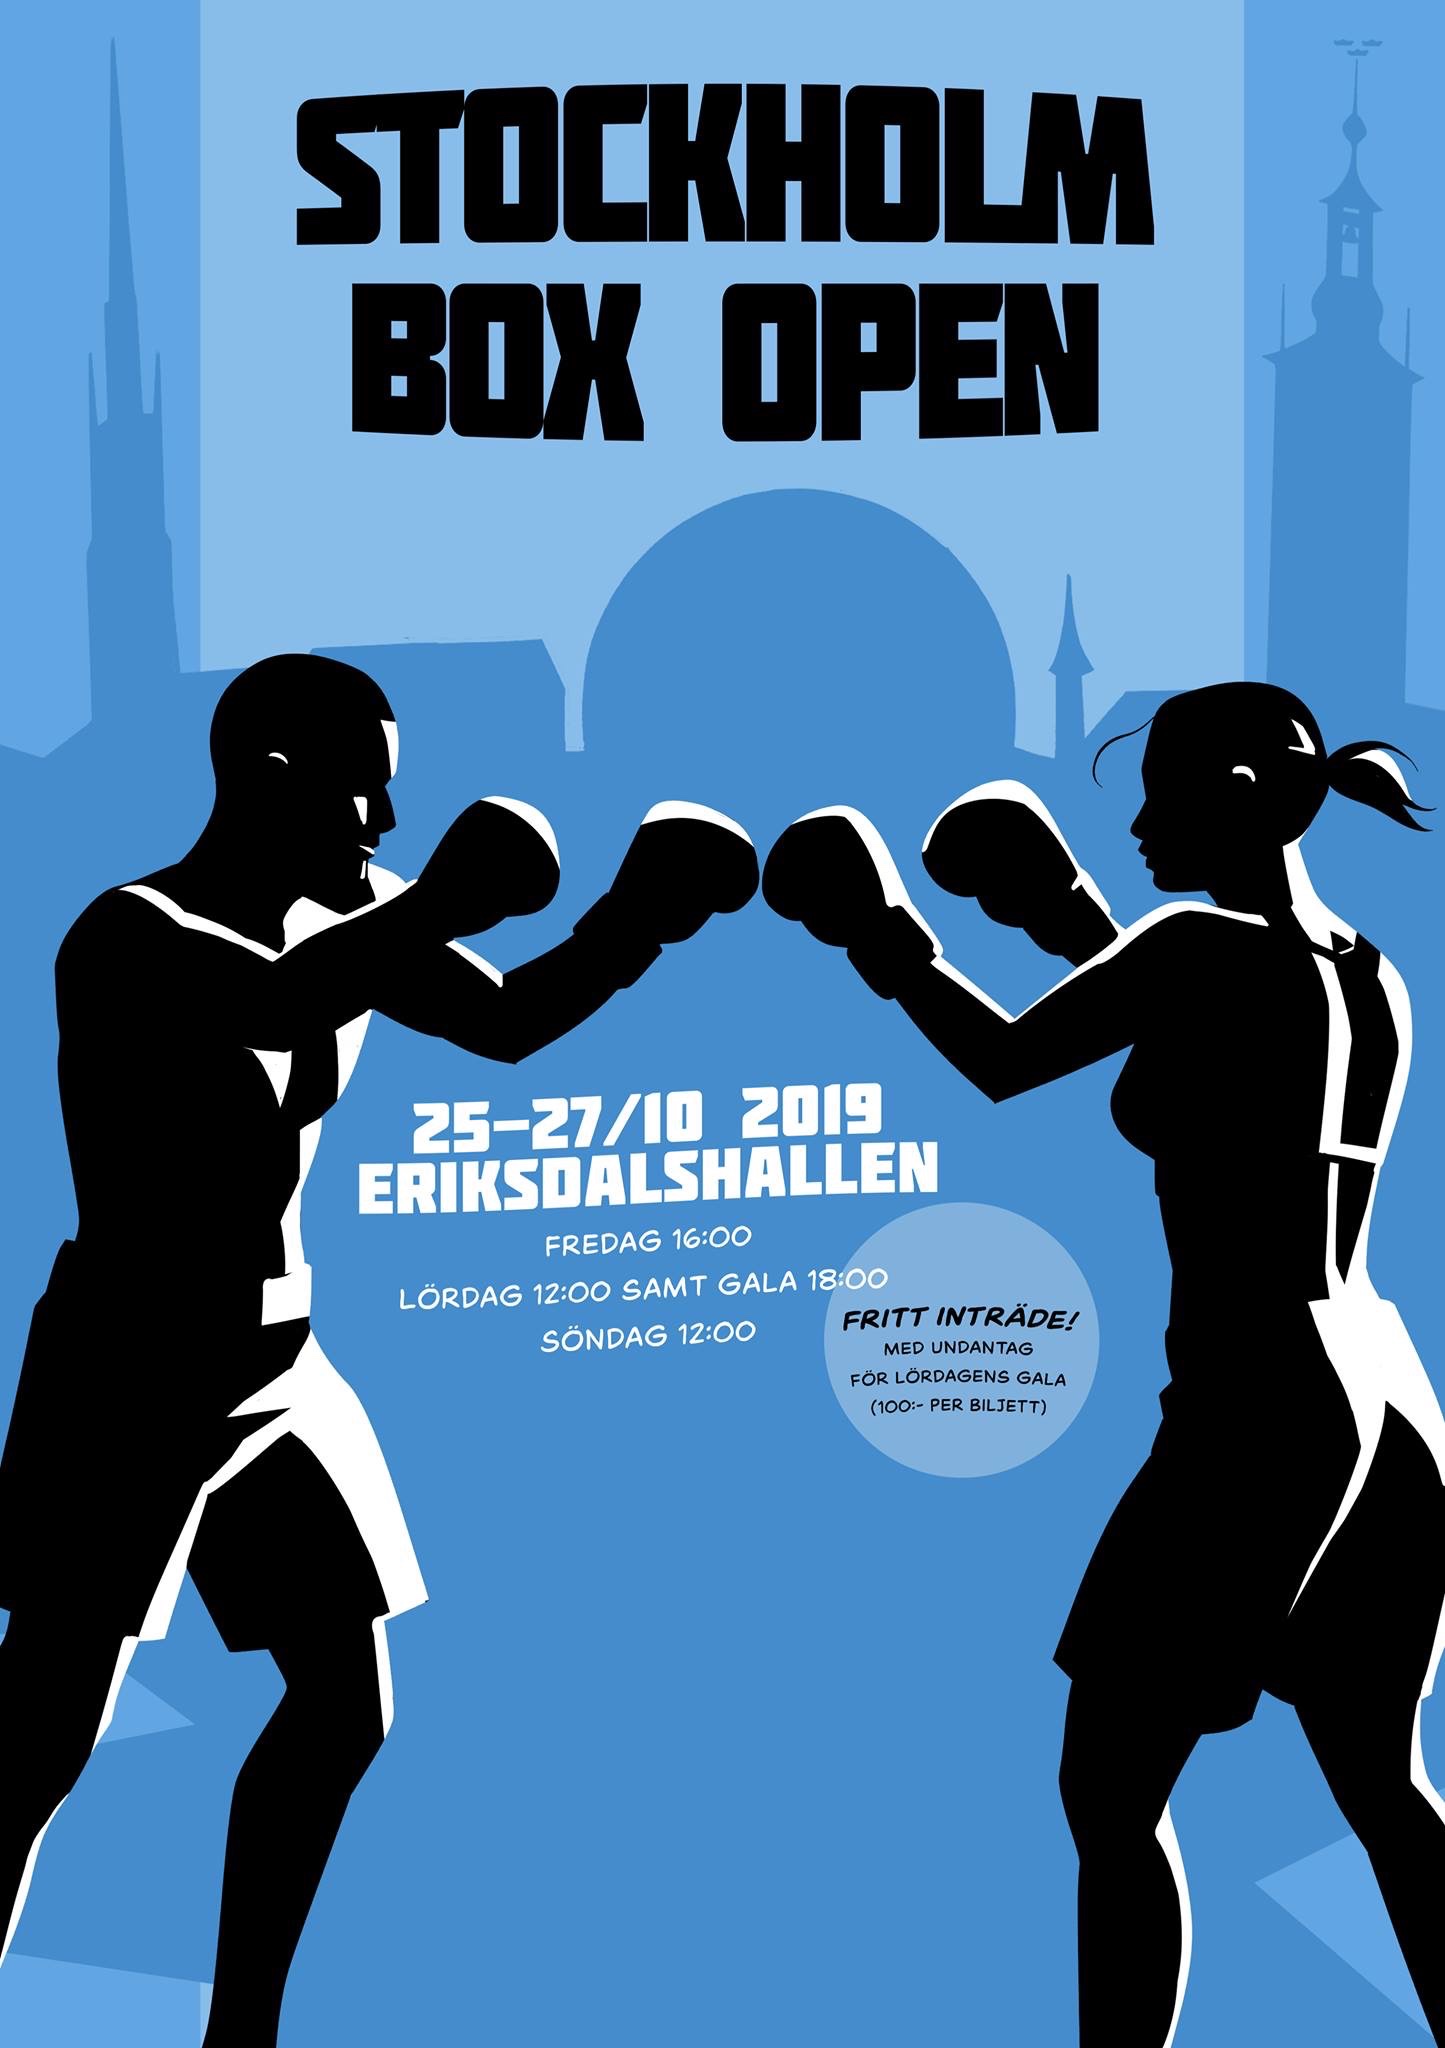 Missa inte Stockholm Box Open